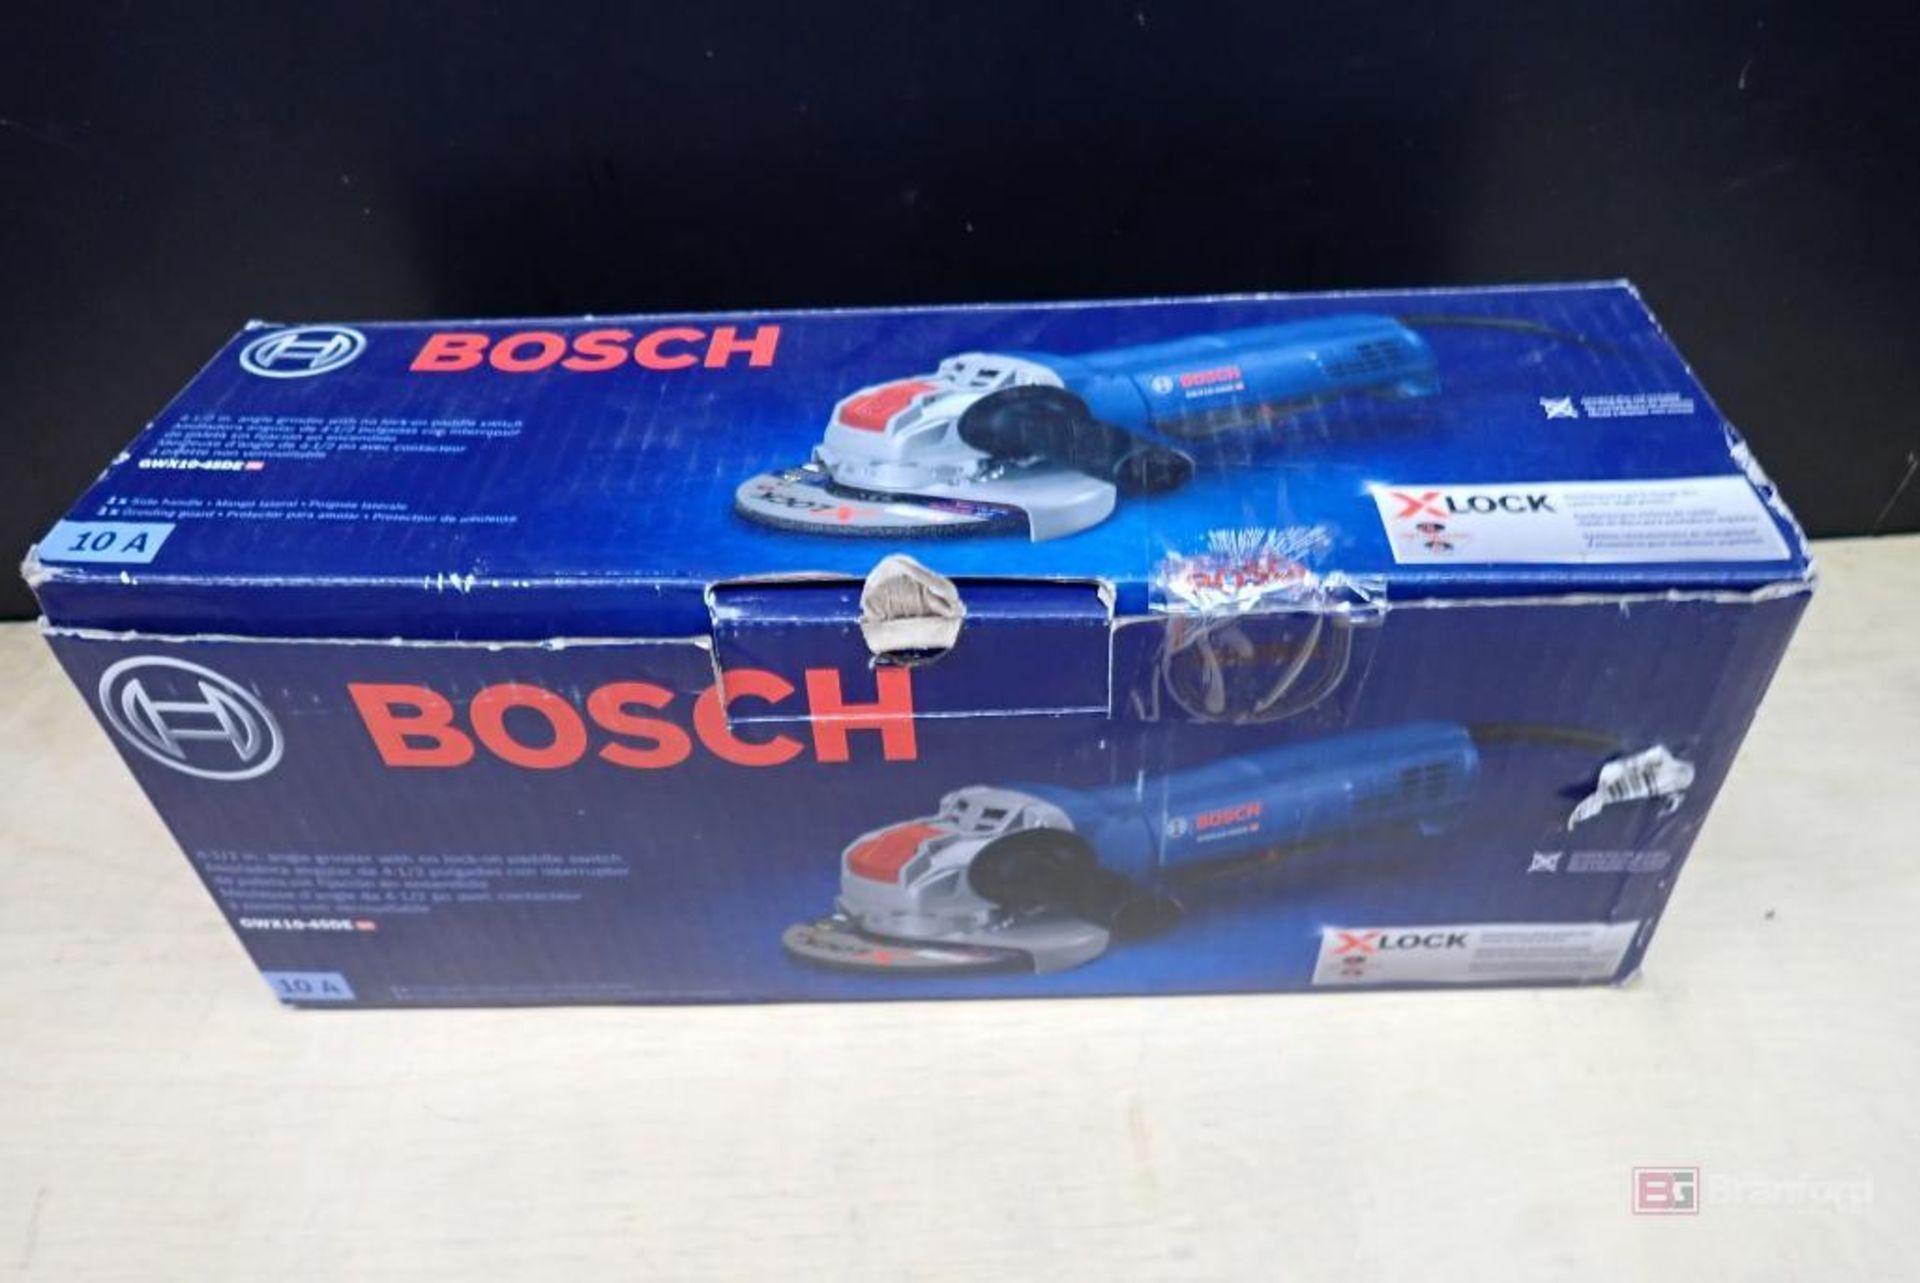 Bosch XLock GWX10-45DE Angle Grinder